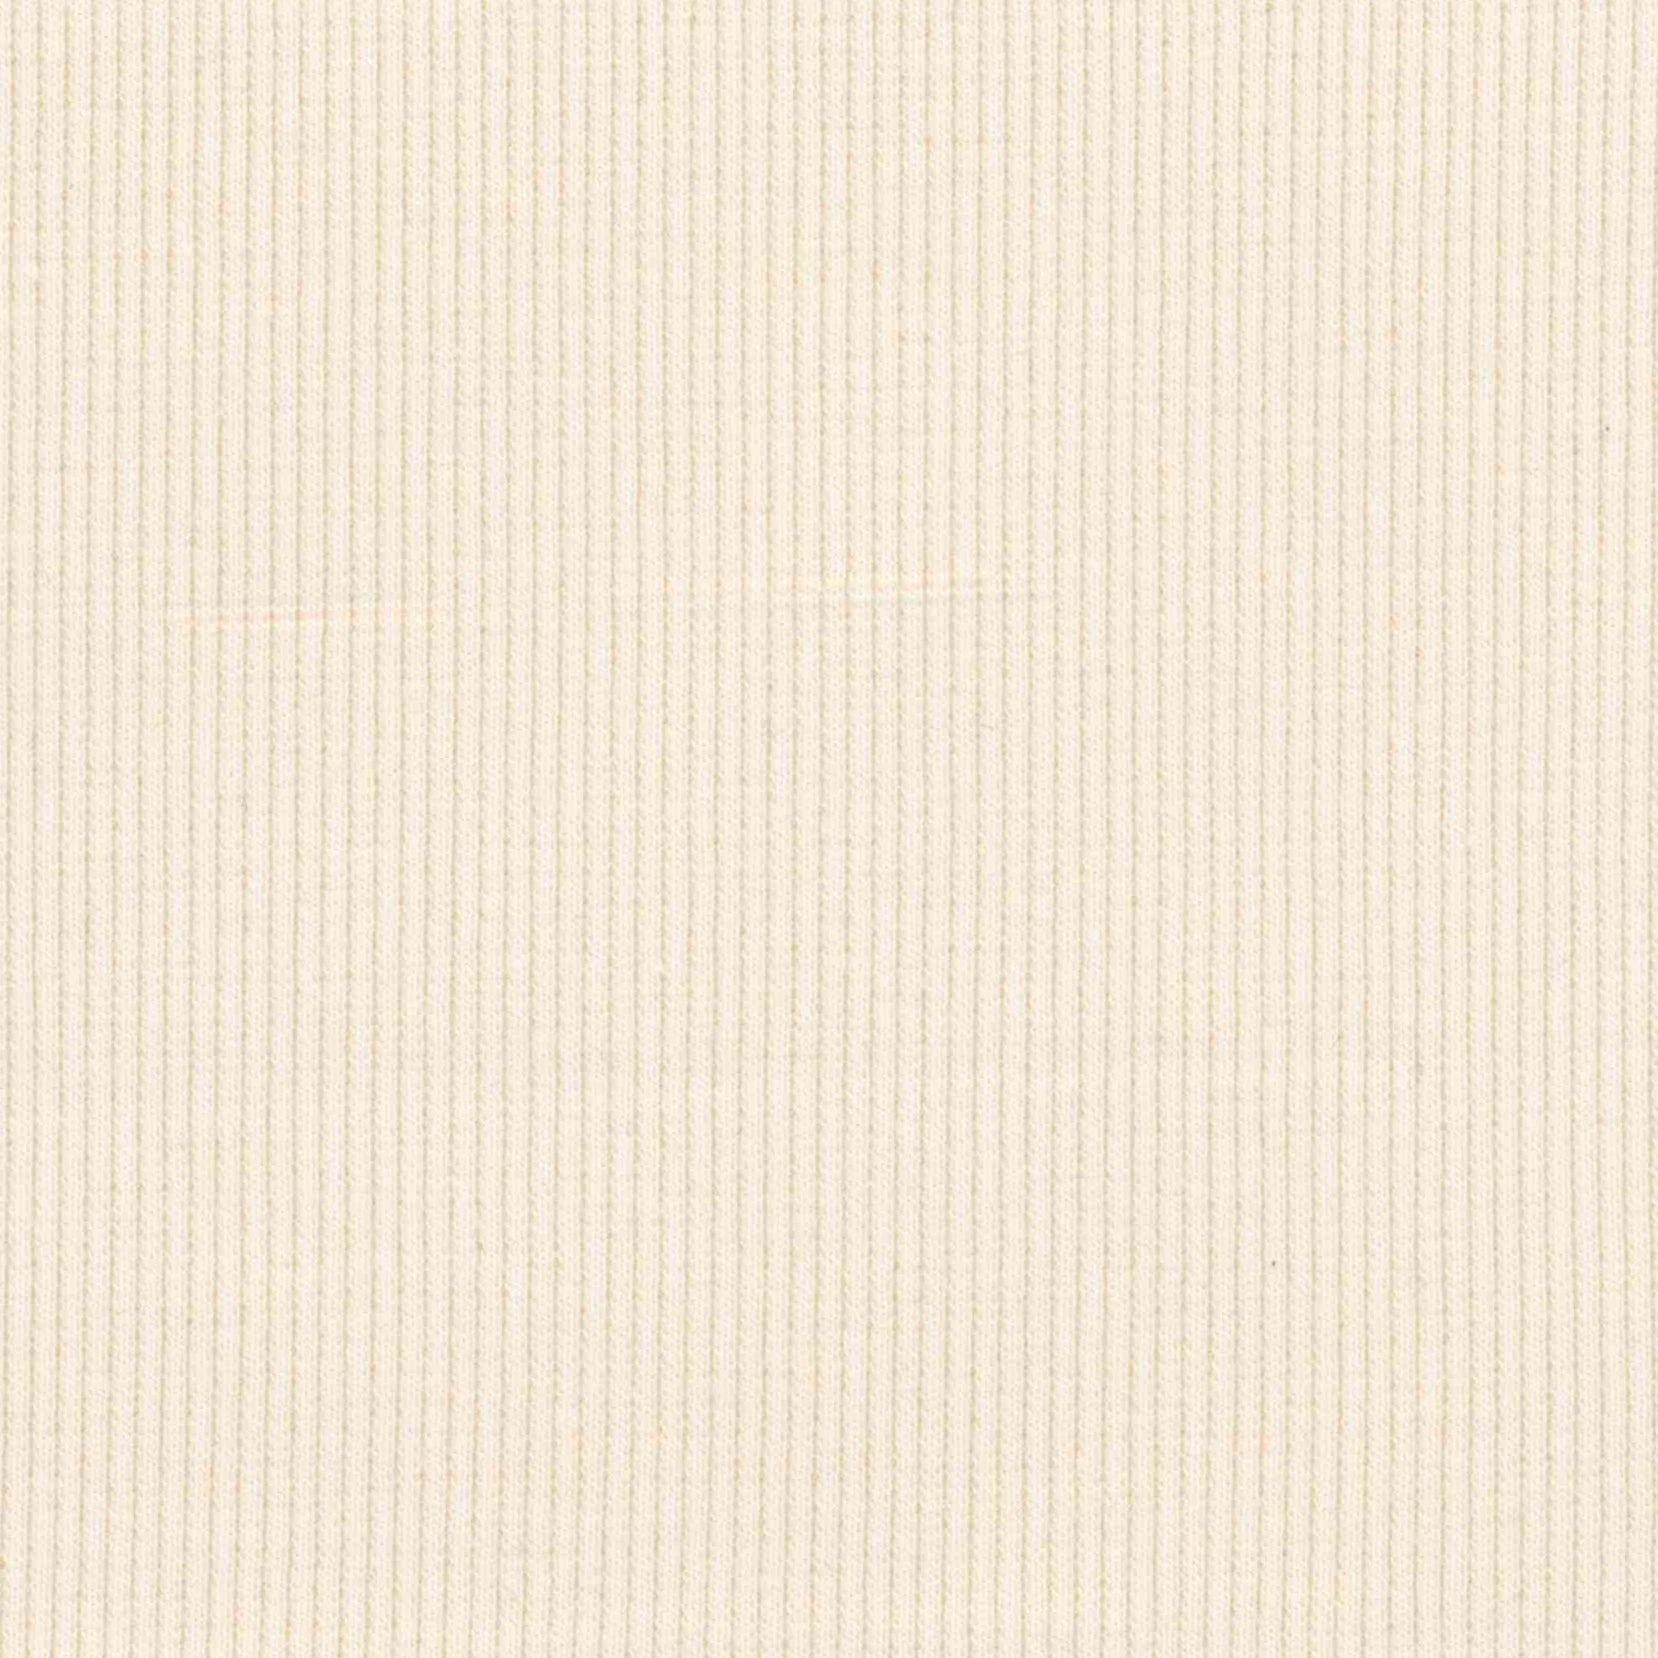 Cotton Elastane Jersey - Fabric Swatch